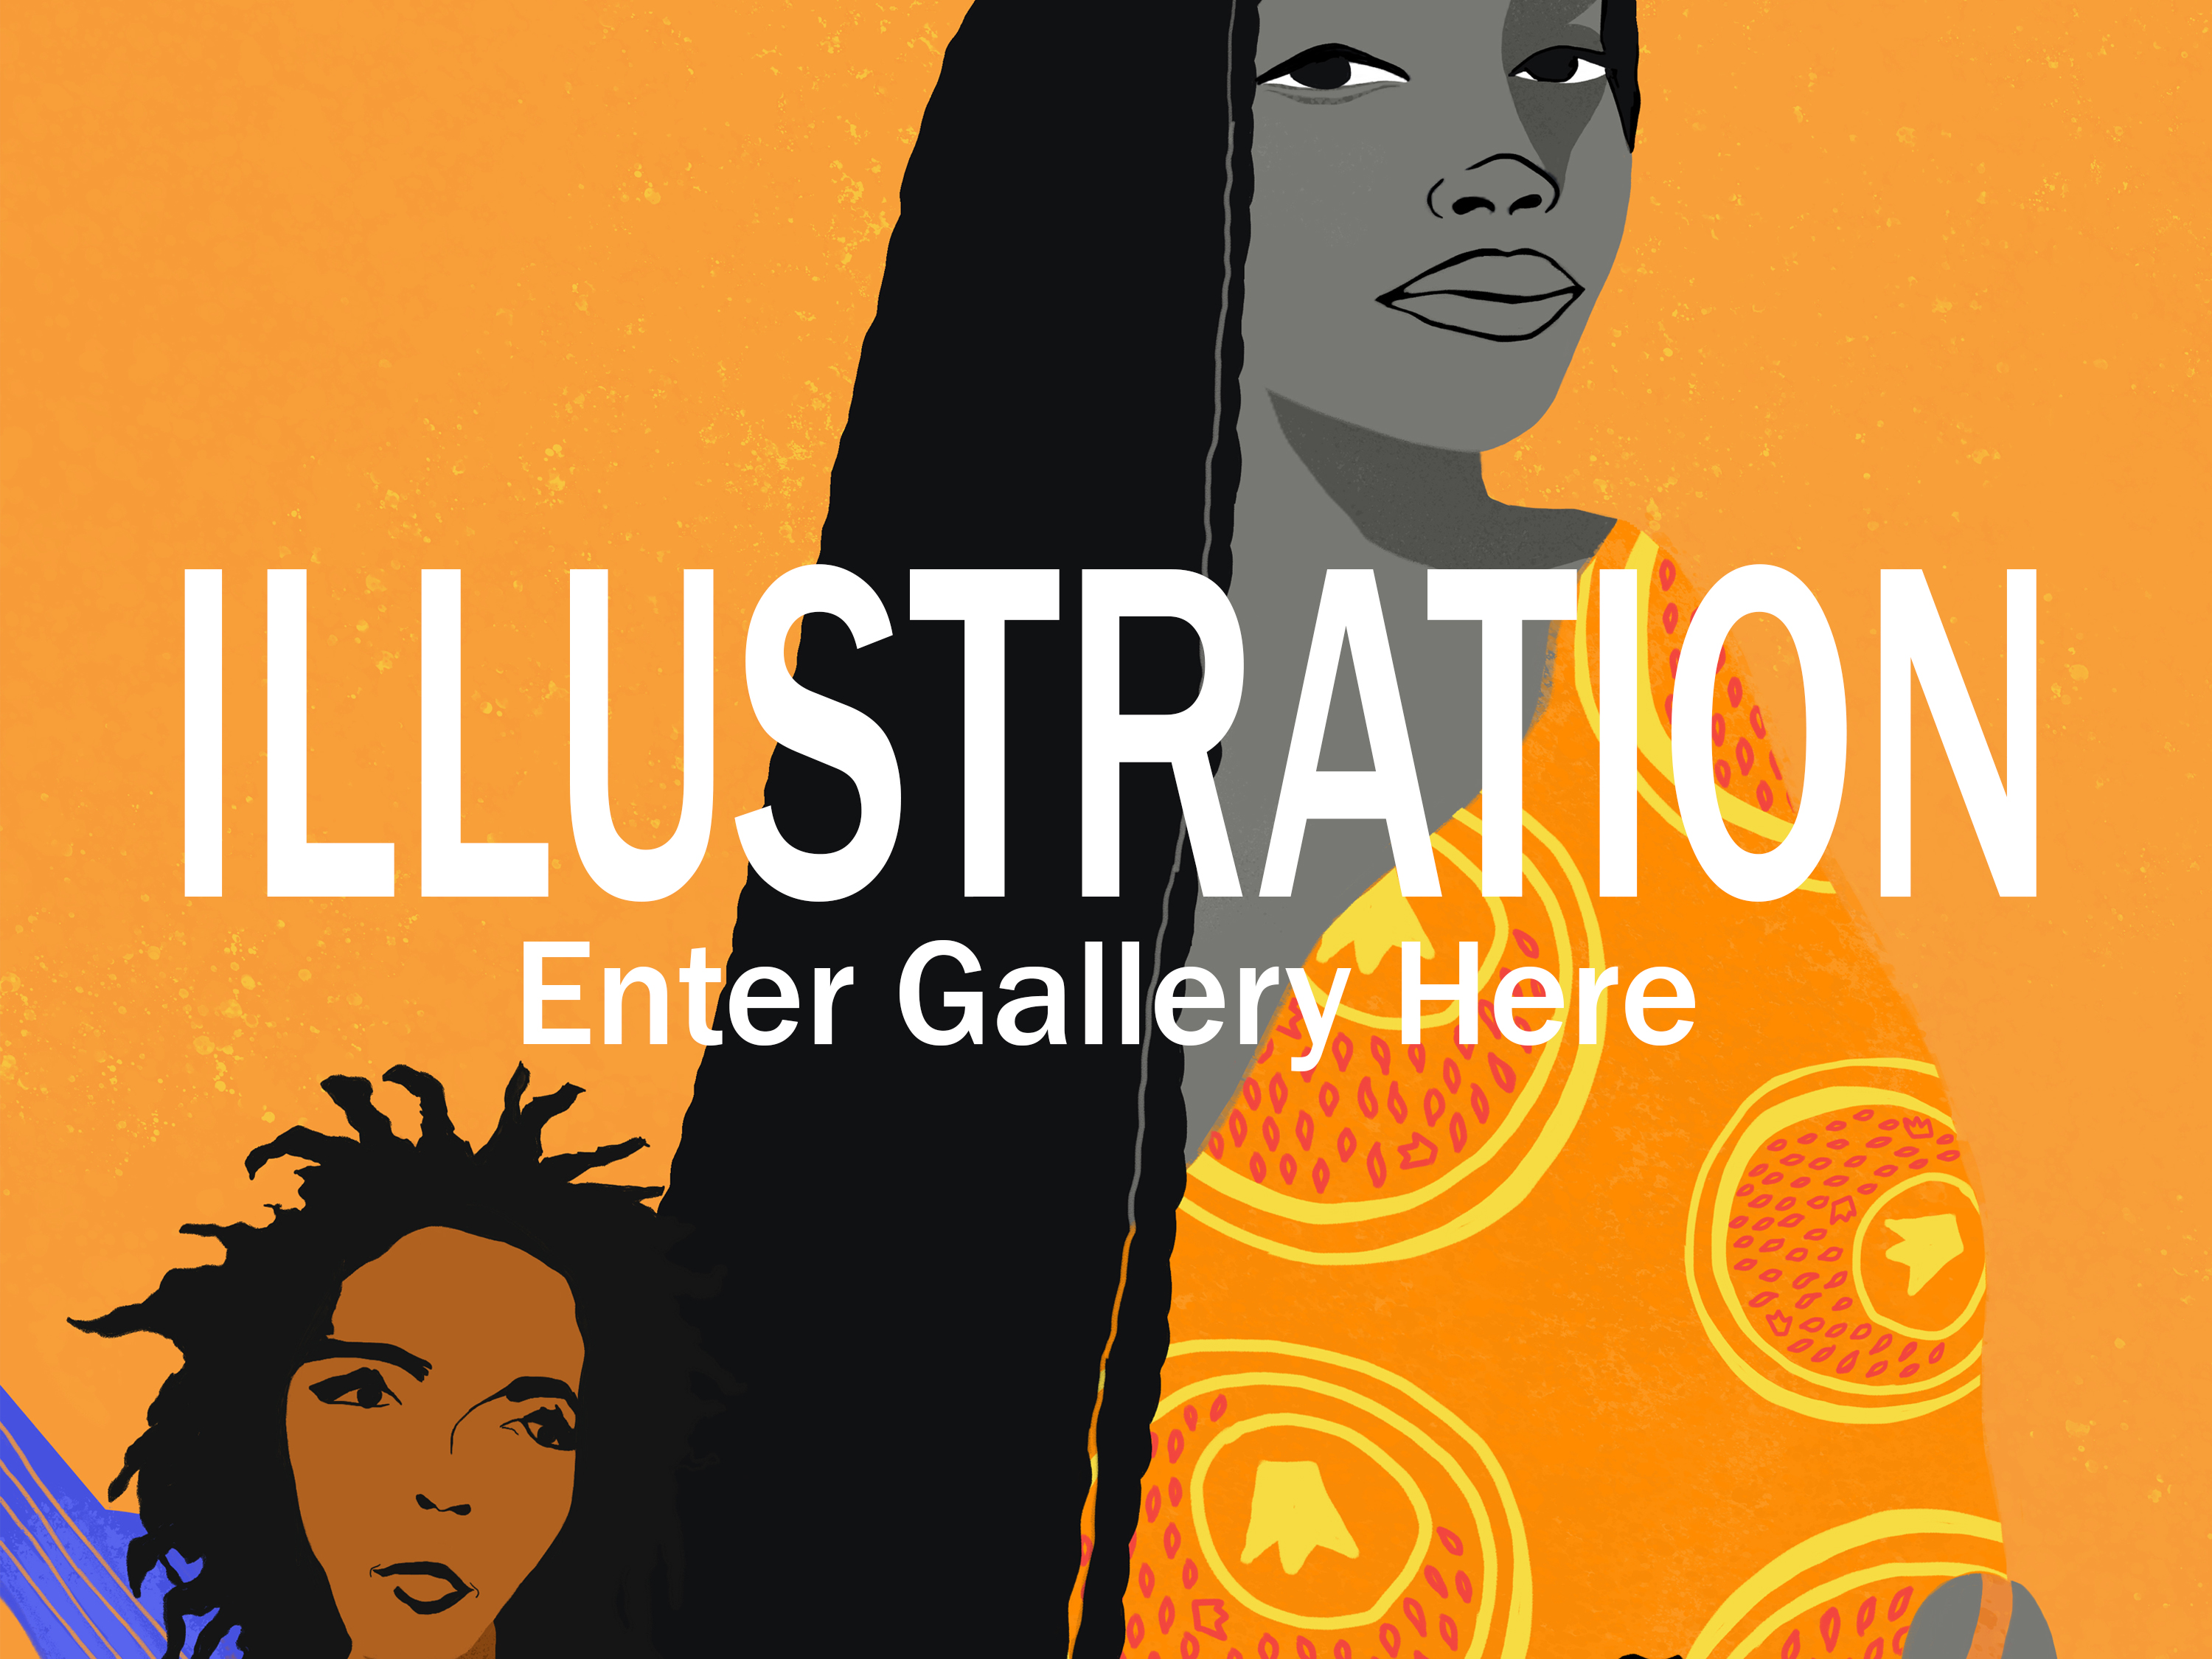 Enter Illustration Gallery Here